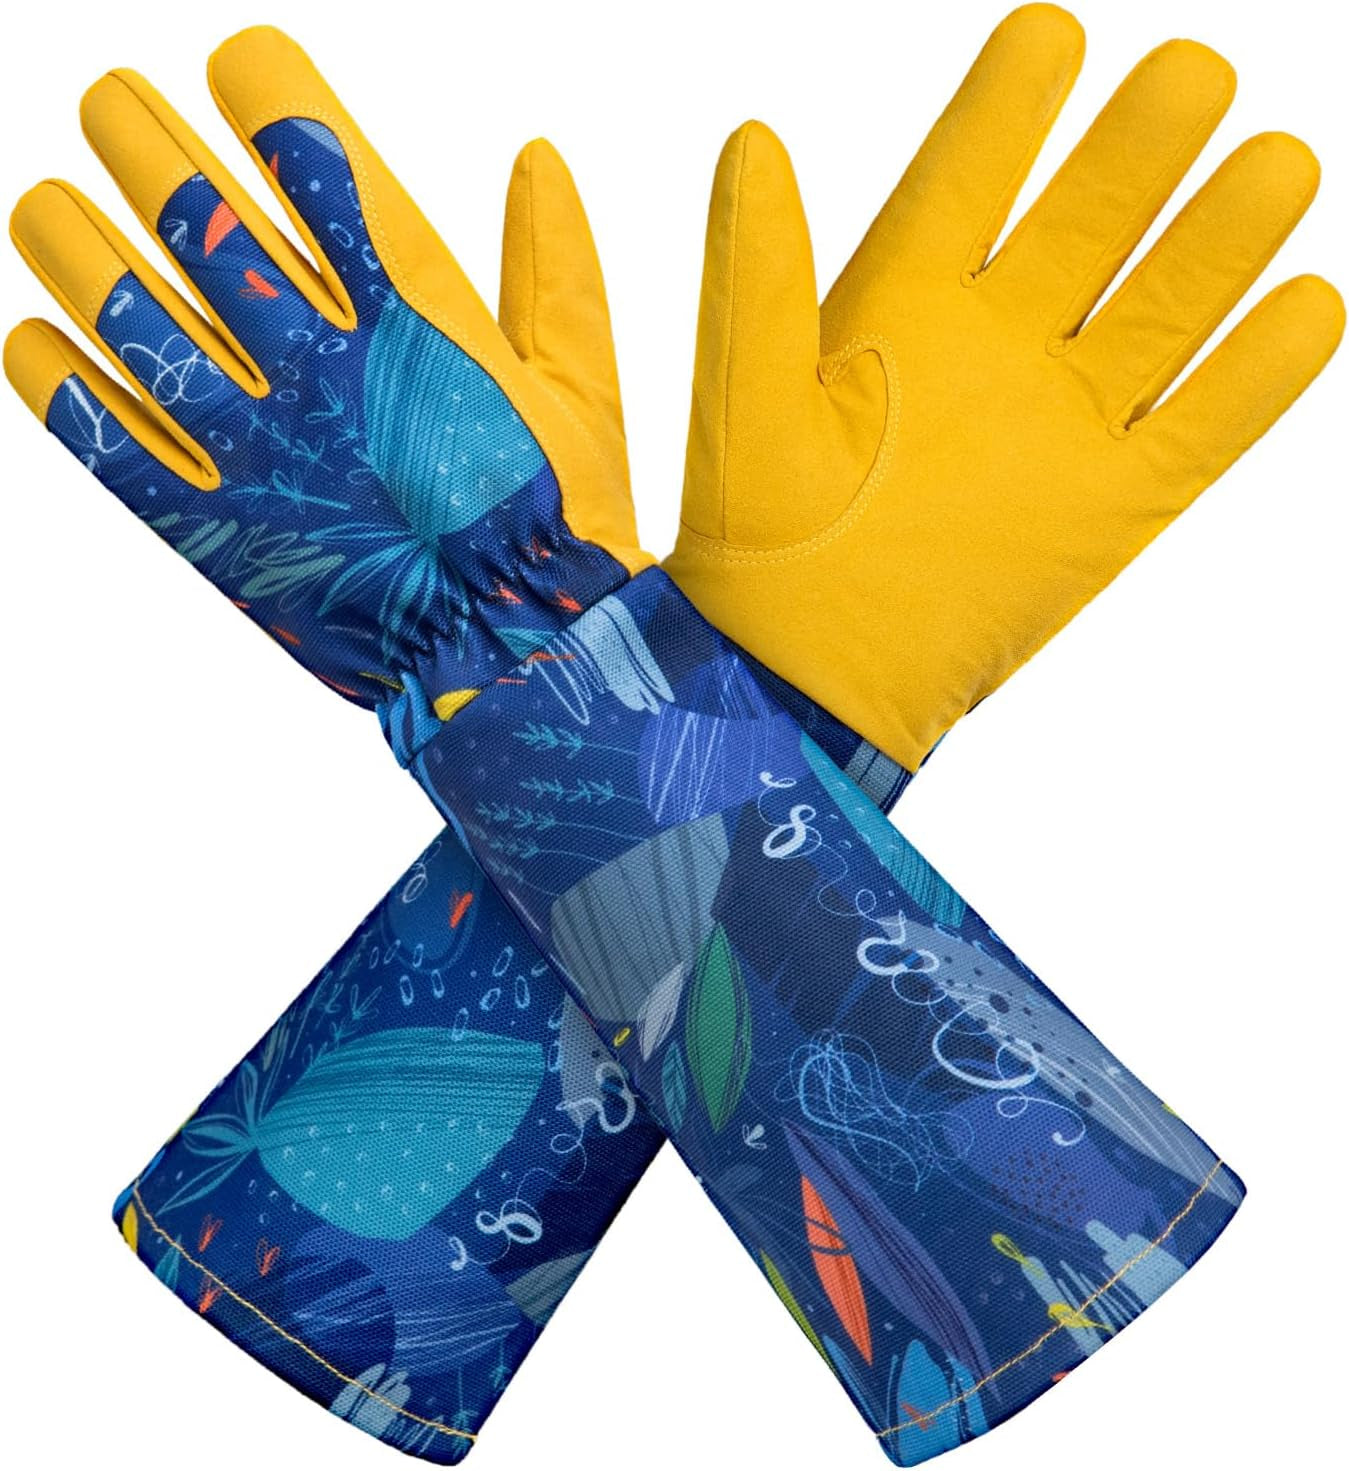 KAYGO Gardening Gloves for Women Long Sleeve, Light Protective Gloves for Yard and Outdoor Work, Best Garden Gifts for Gardener,Gray,M